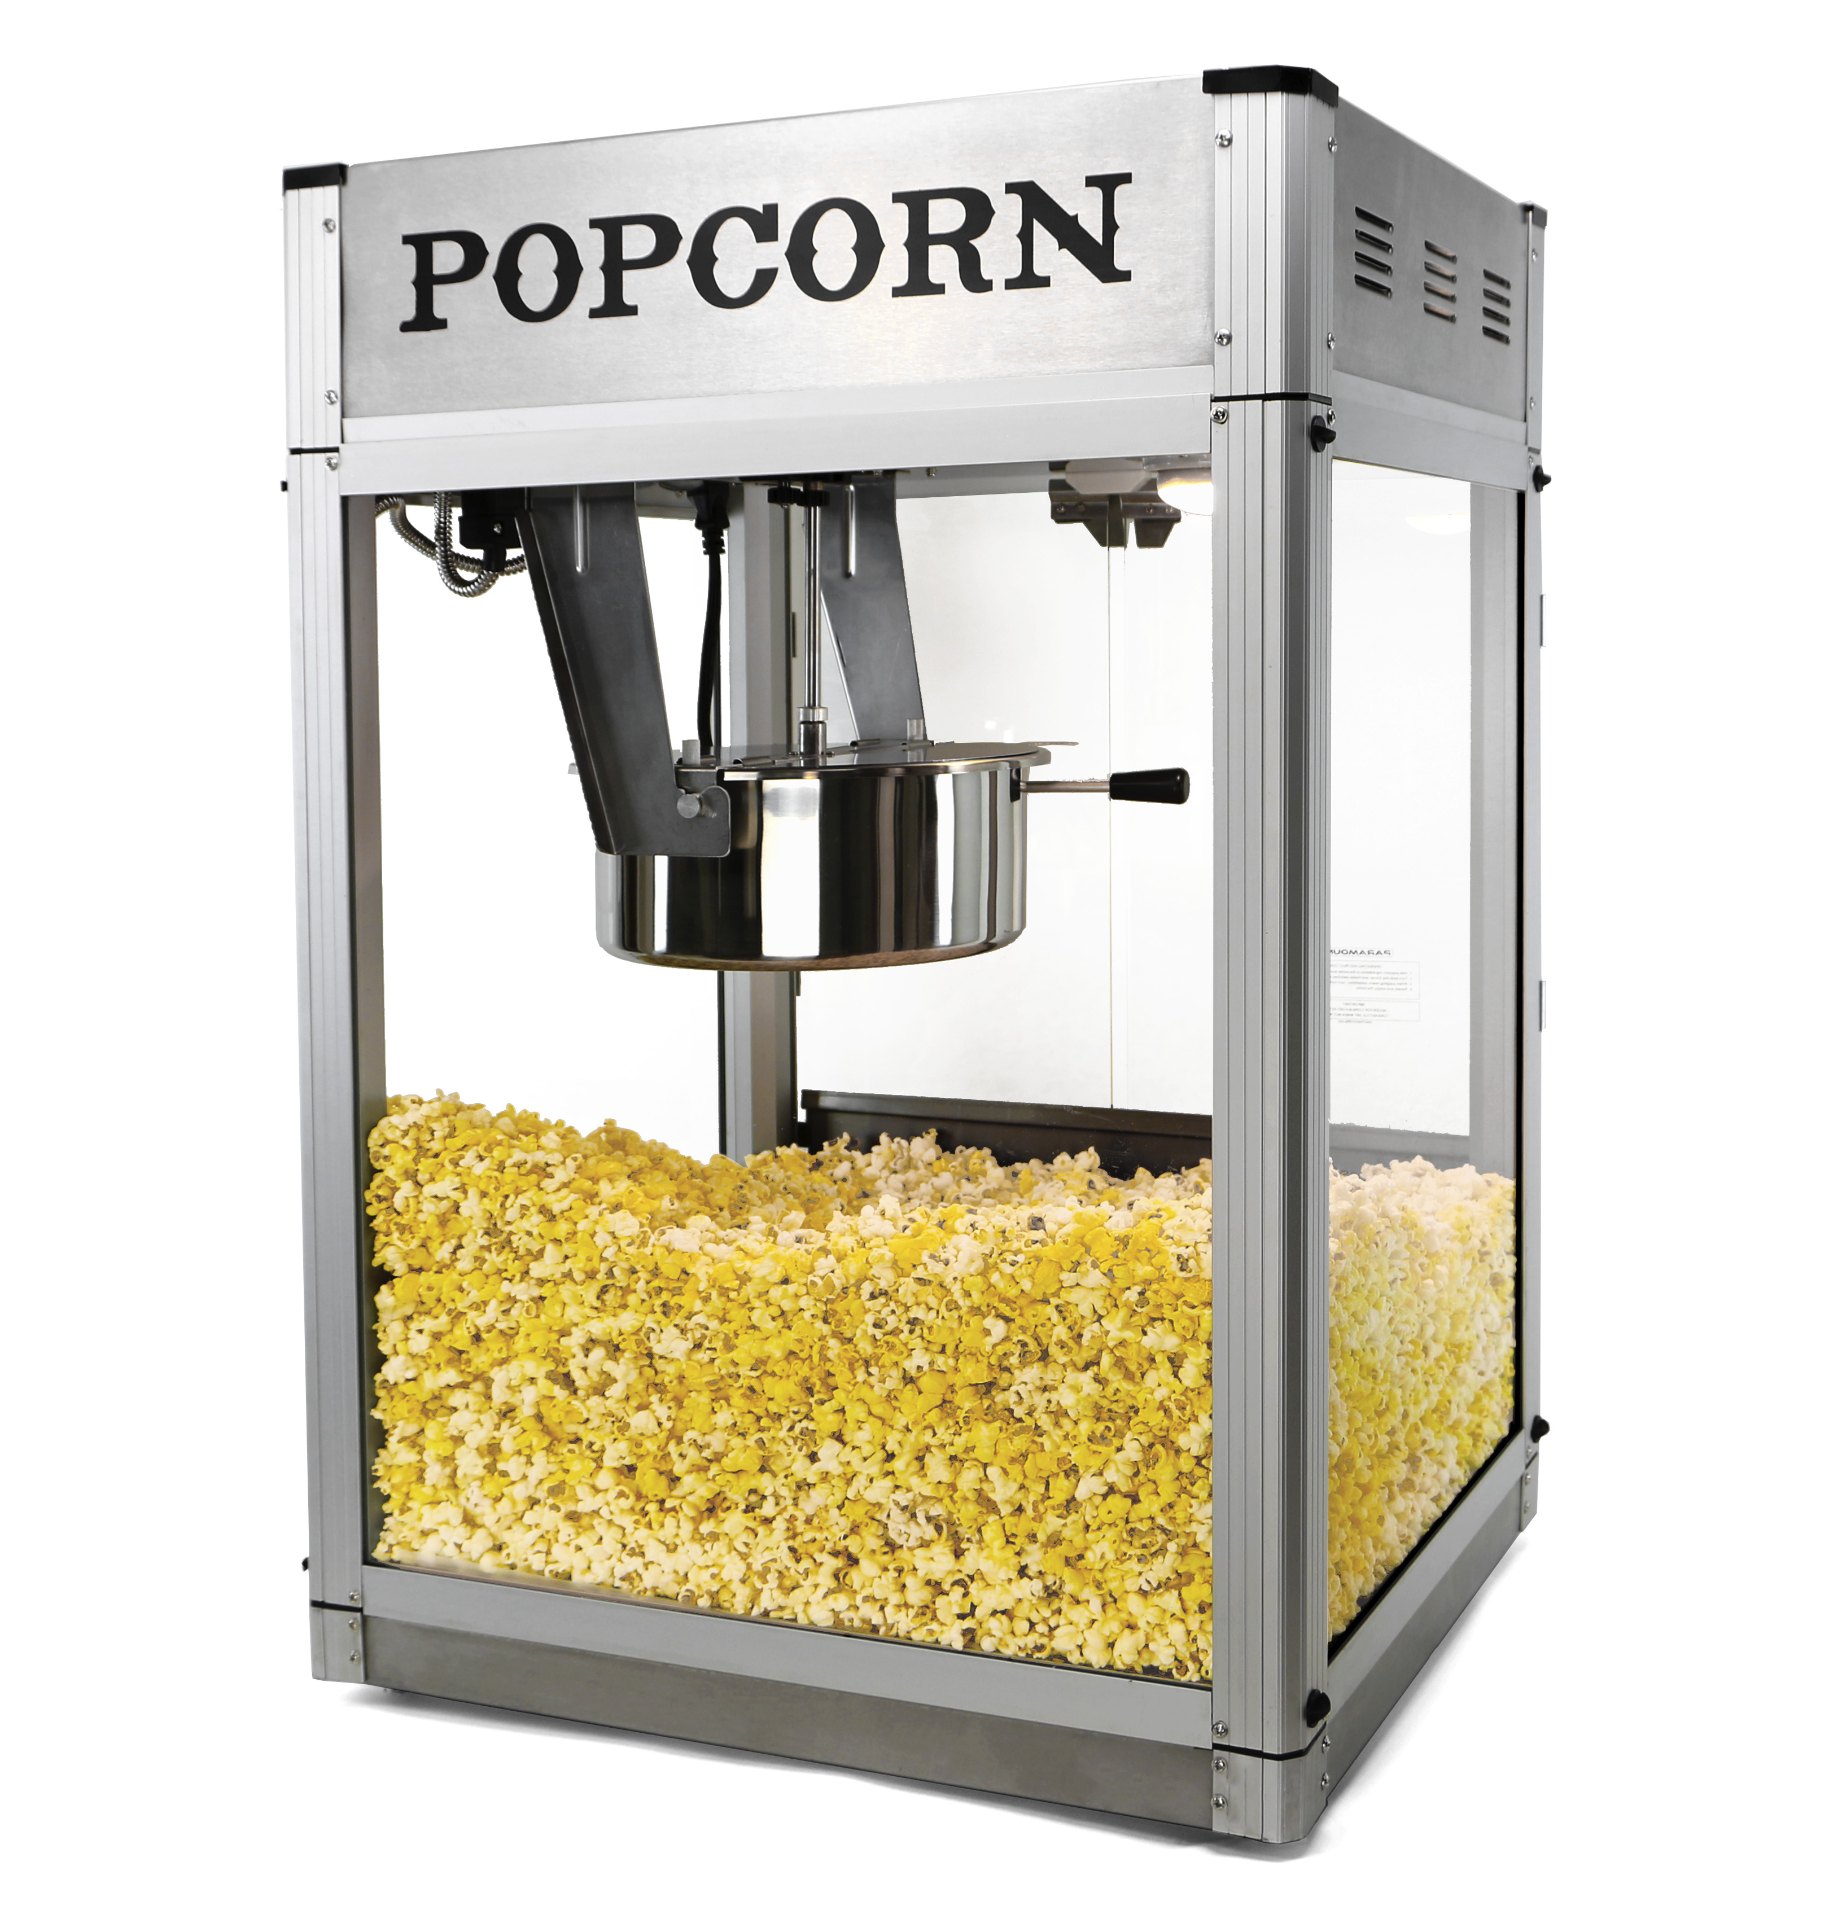 P-801N Paramount 8oz Popcorn Maker Machine - New Upgraded Feature